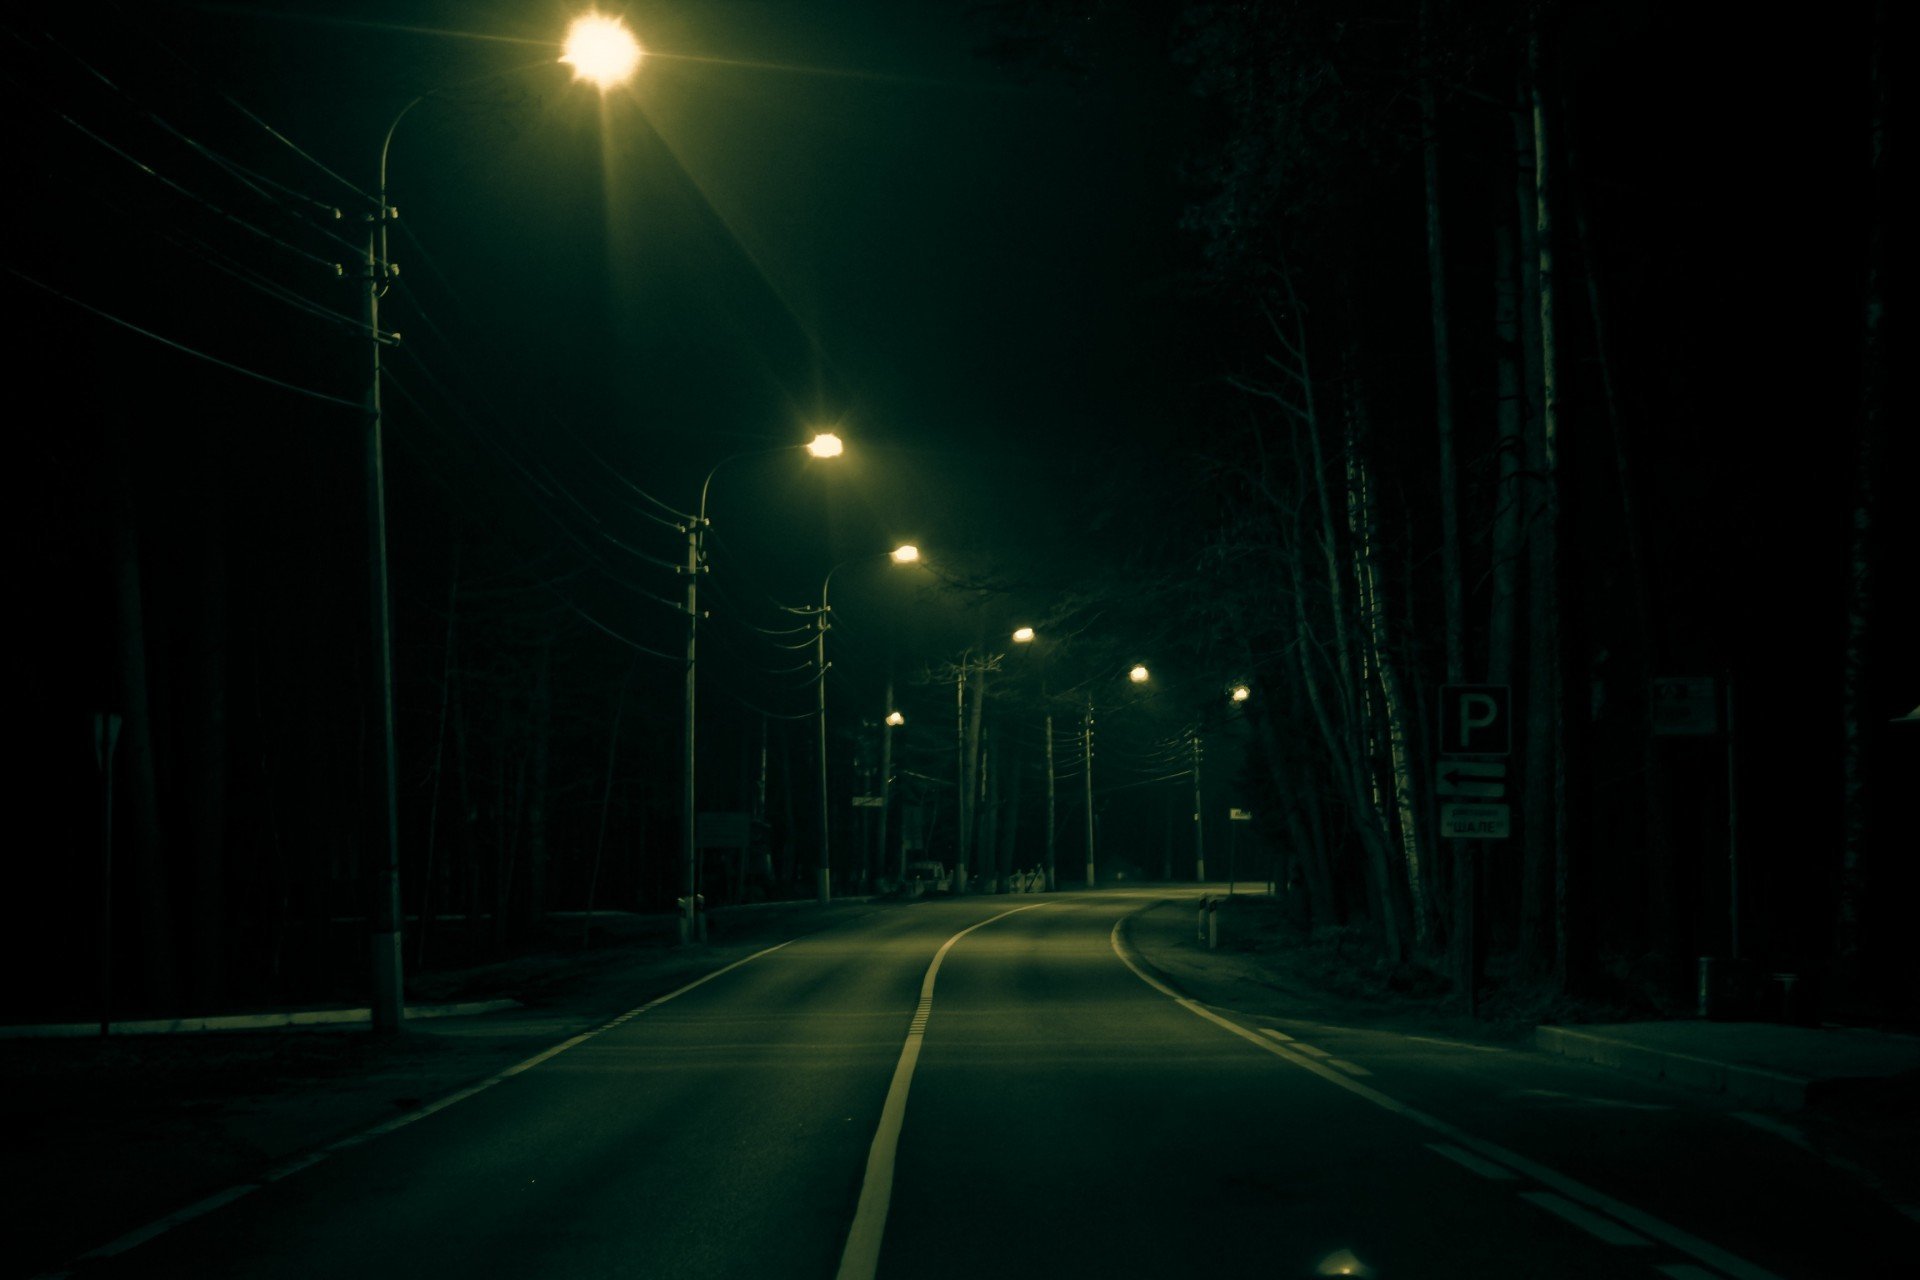 Ночная улица. Пустая улица ночью. Дорога ночью. Темная улица с фонарями. Темный свет фонарей